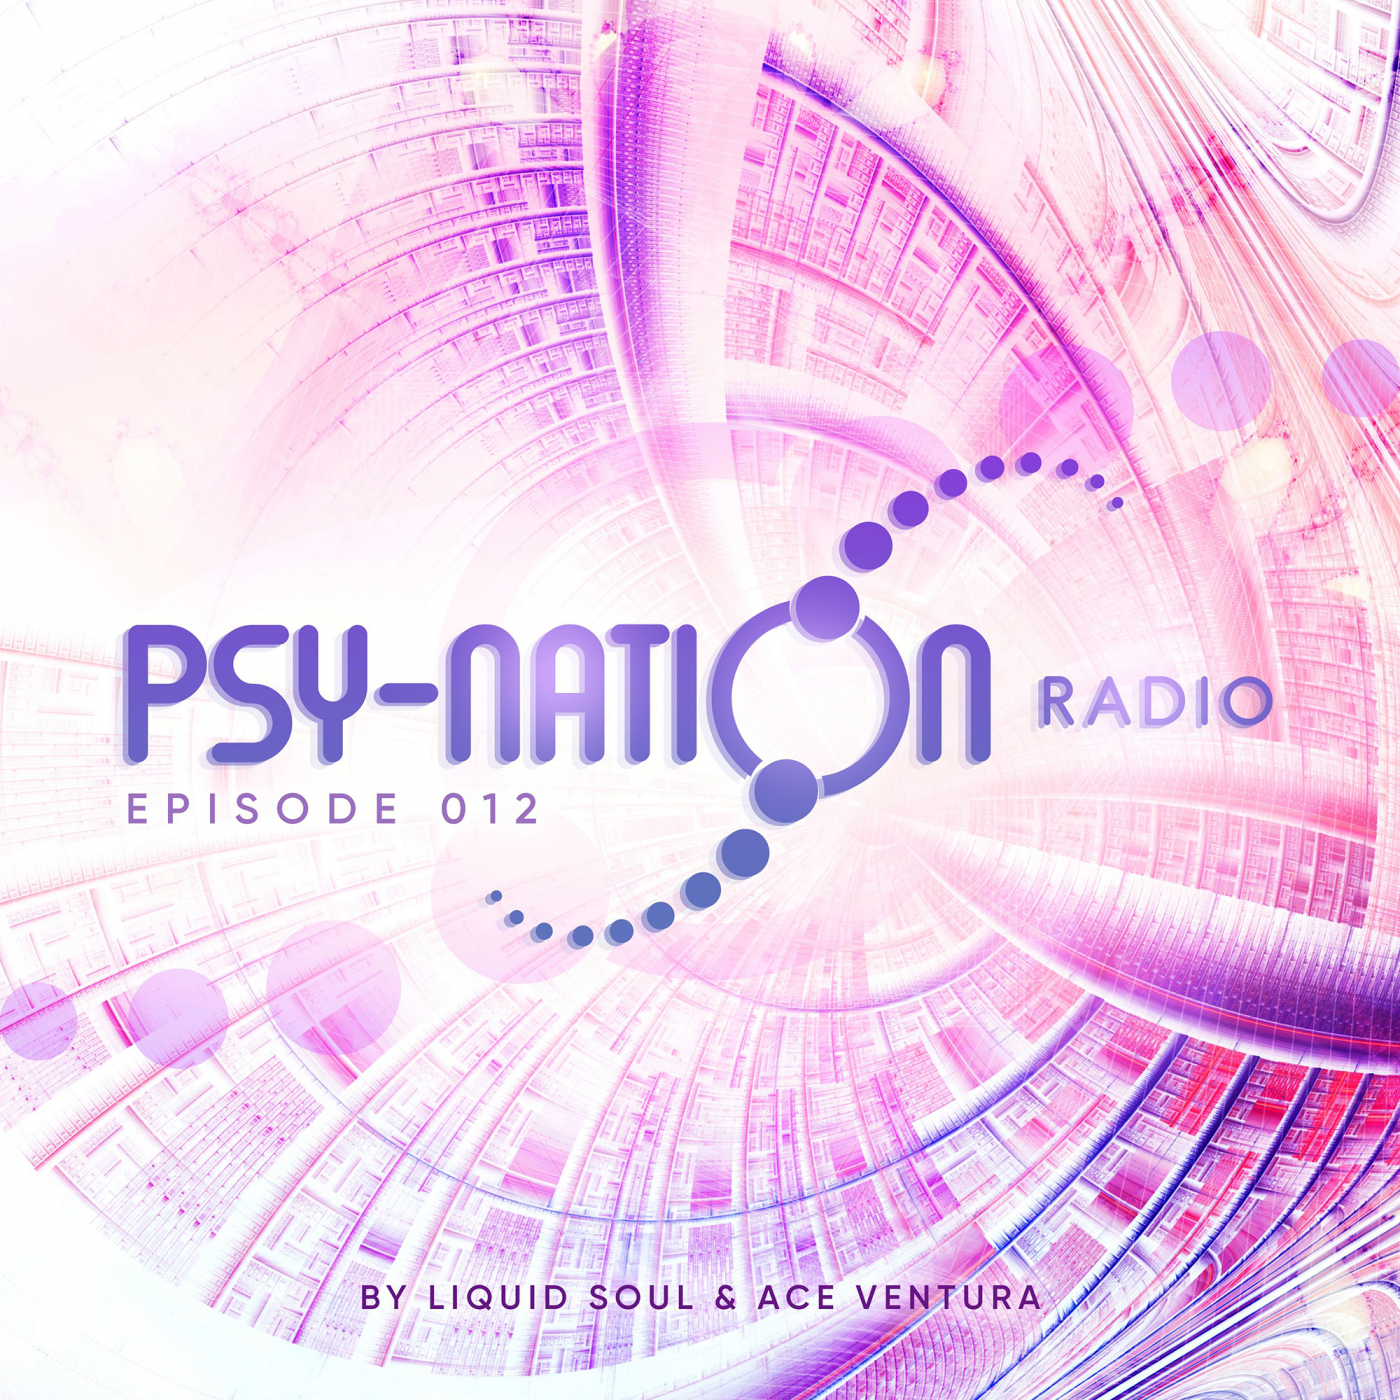 Psy-Nation Radio 012 | incl. Captain Hook Mix [Ace Ventura & Liquid Soul]